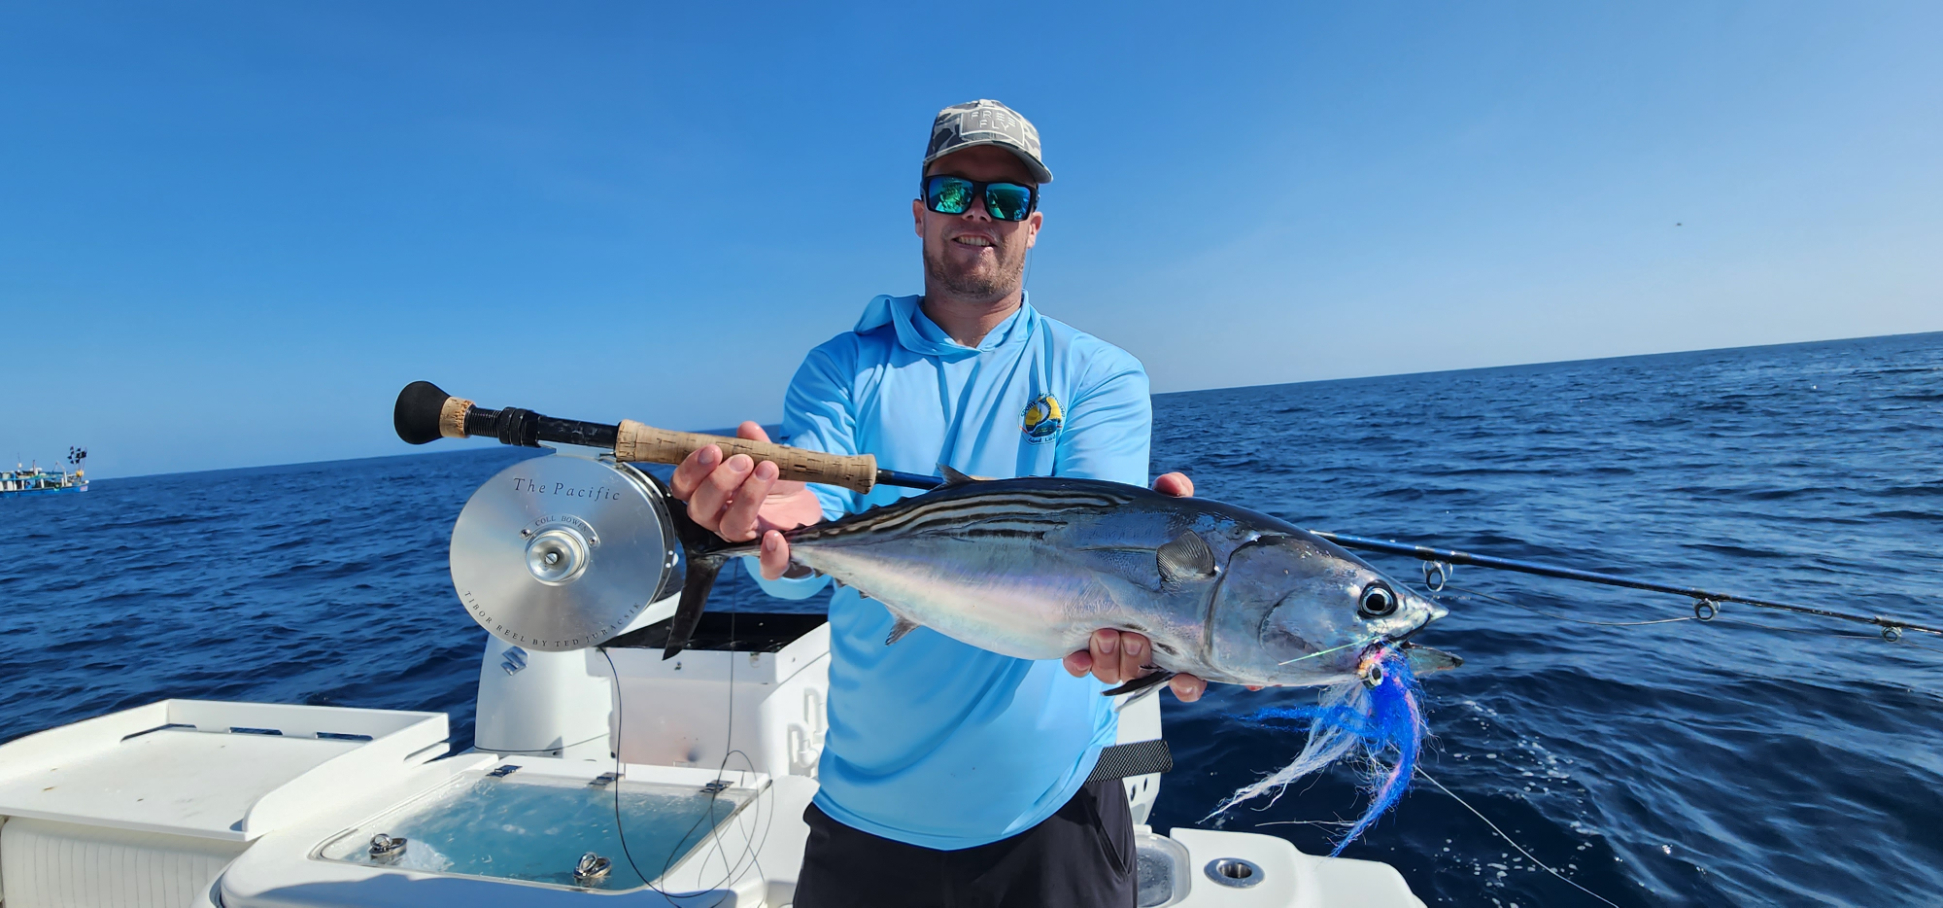 Panama Tuna Fishing - Sport fishing's toughest challenge